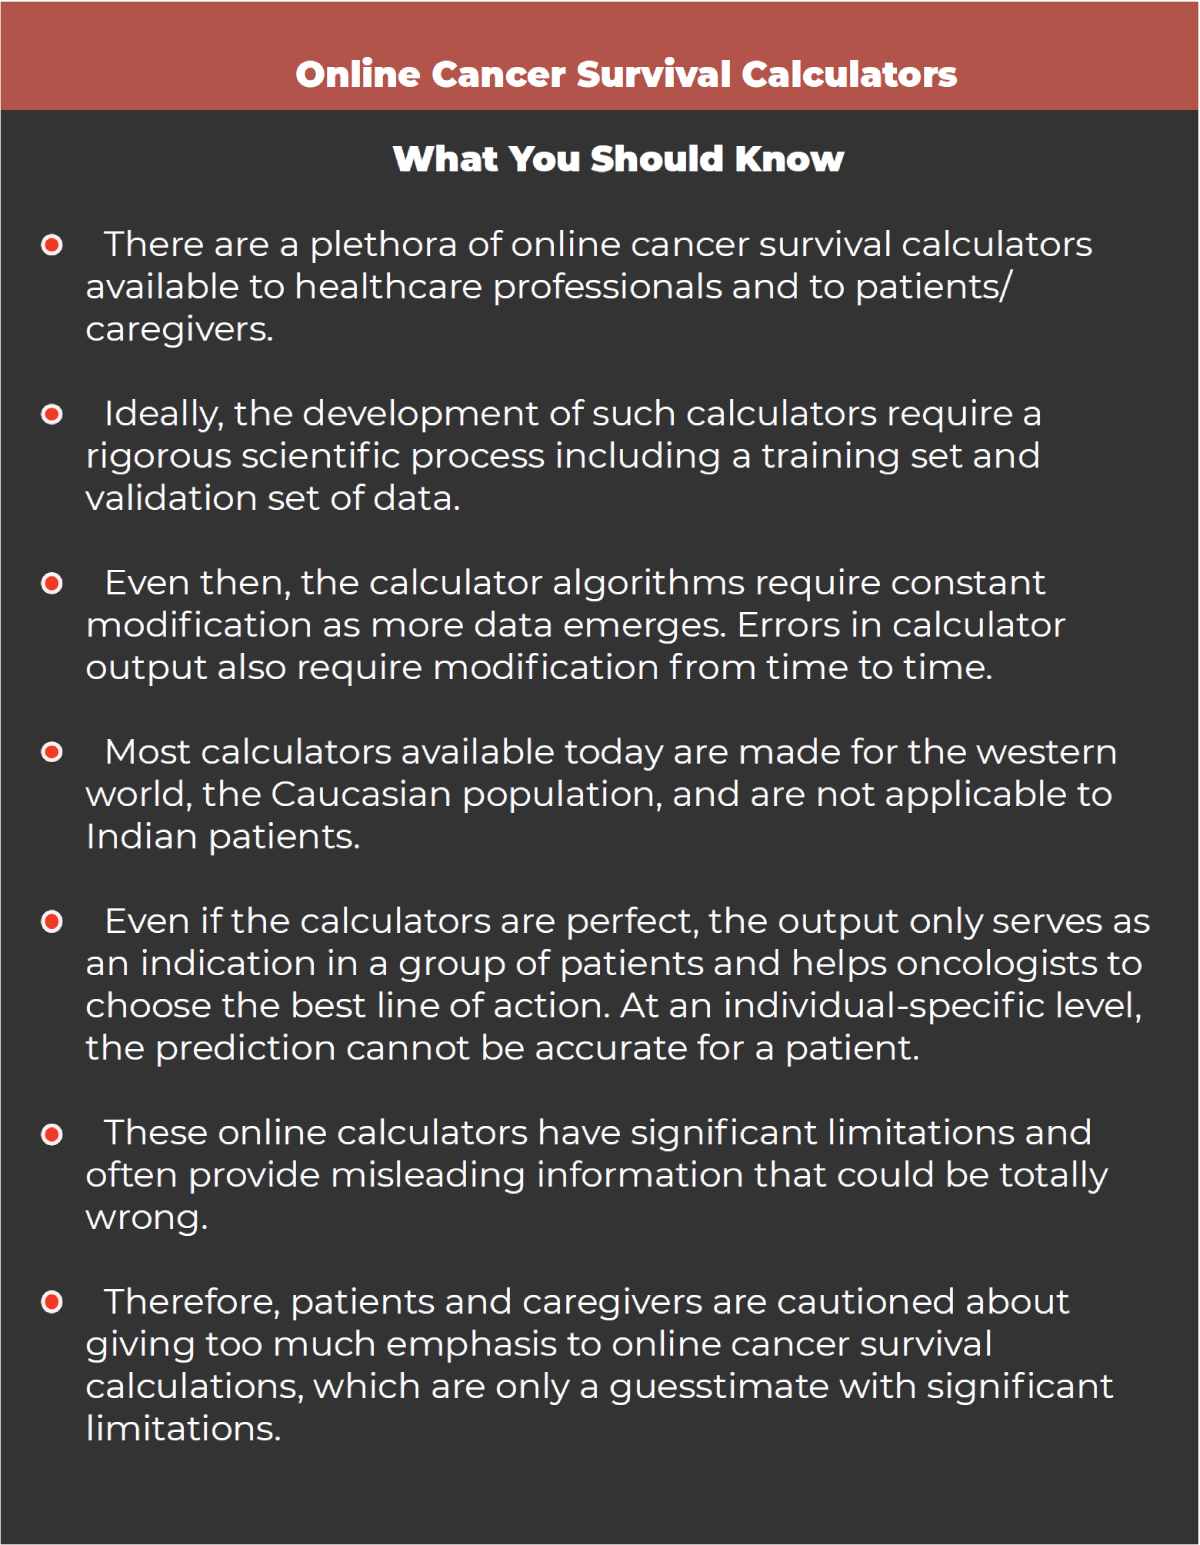 Online Cancer Survival Calculators